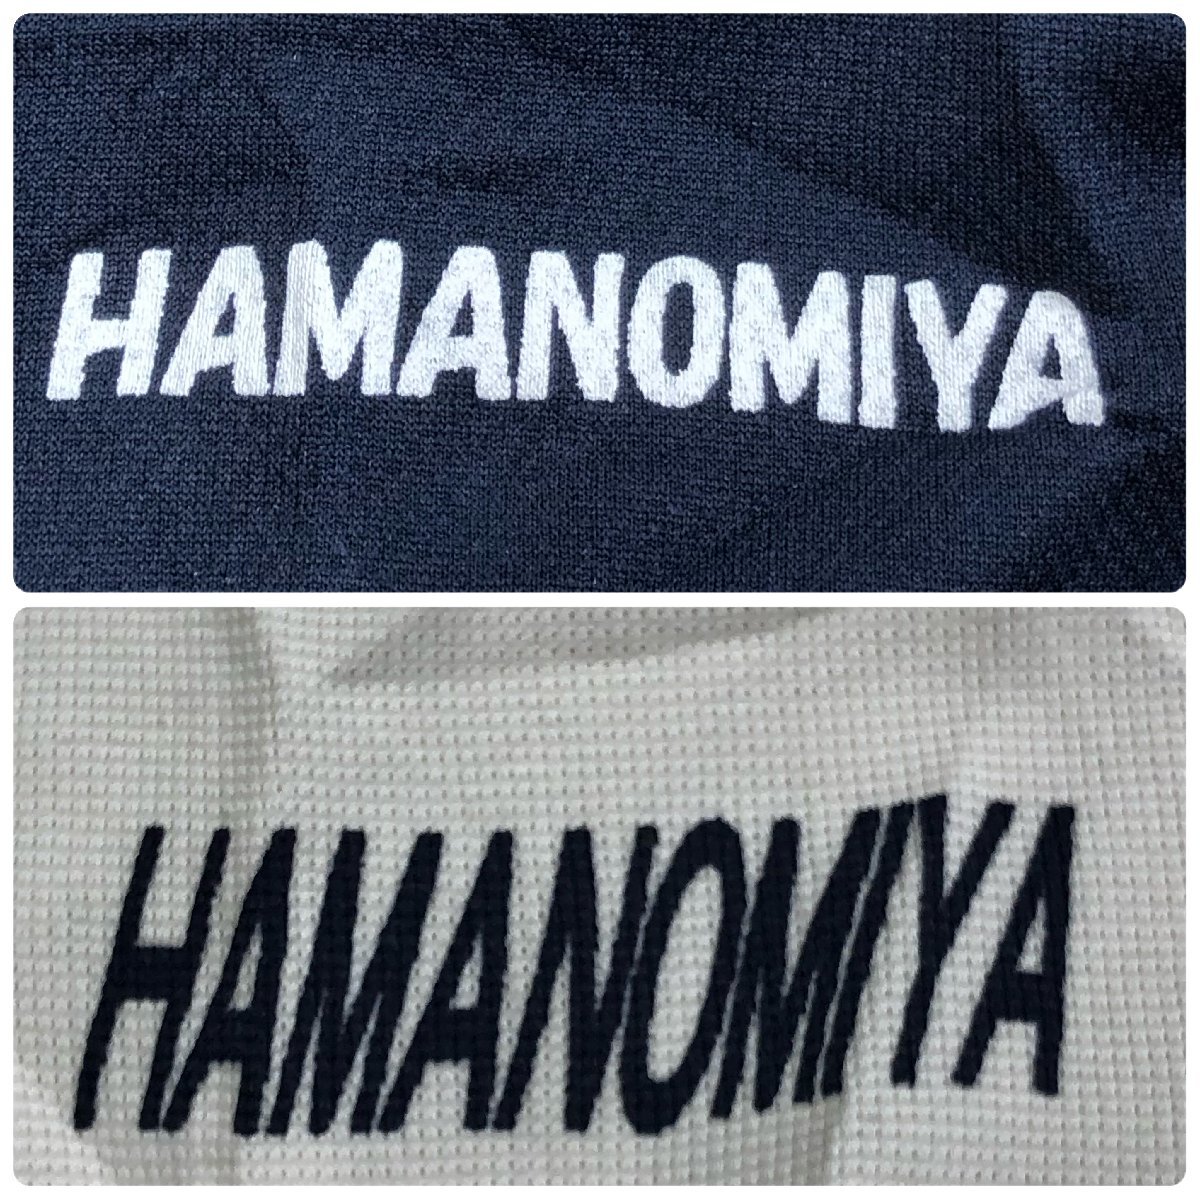 M367/( used ) Hyogo prefecture .. . junior high school gym uniform 6 point / designation goods /M/L/O/ long sleeve / short sleeves / navy blue series / white /MIZUNO/asics/ man woman unknown / gym uniform / jersey / summarize 